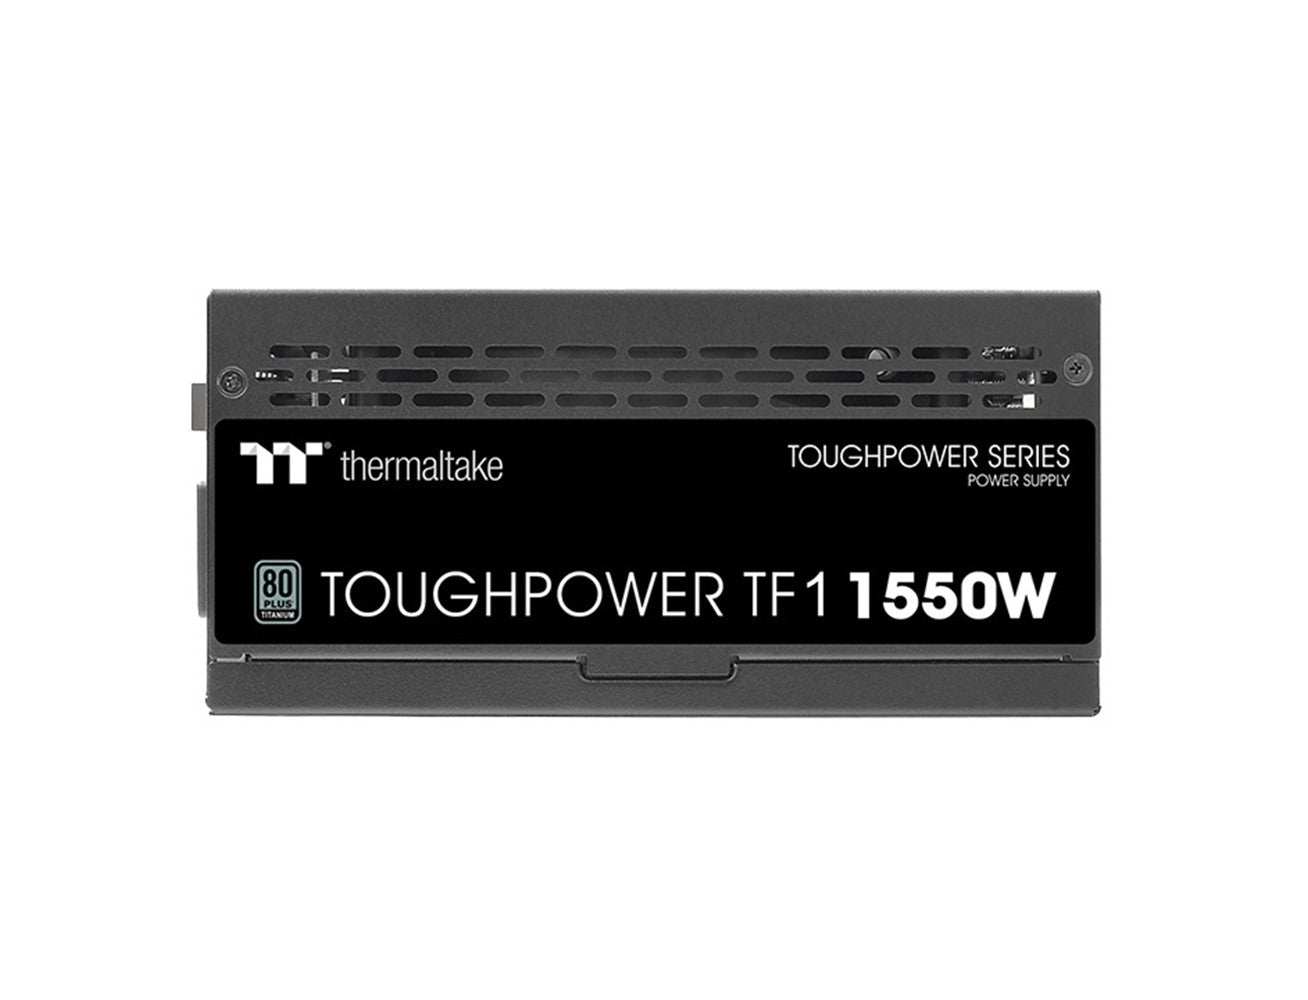 Thermaltake Toughpower TF1, 1550W, 80 PLUS Titanium, Fully Modular Power Supply - Blink.sa.com